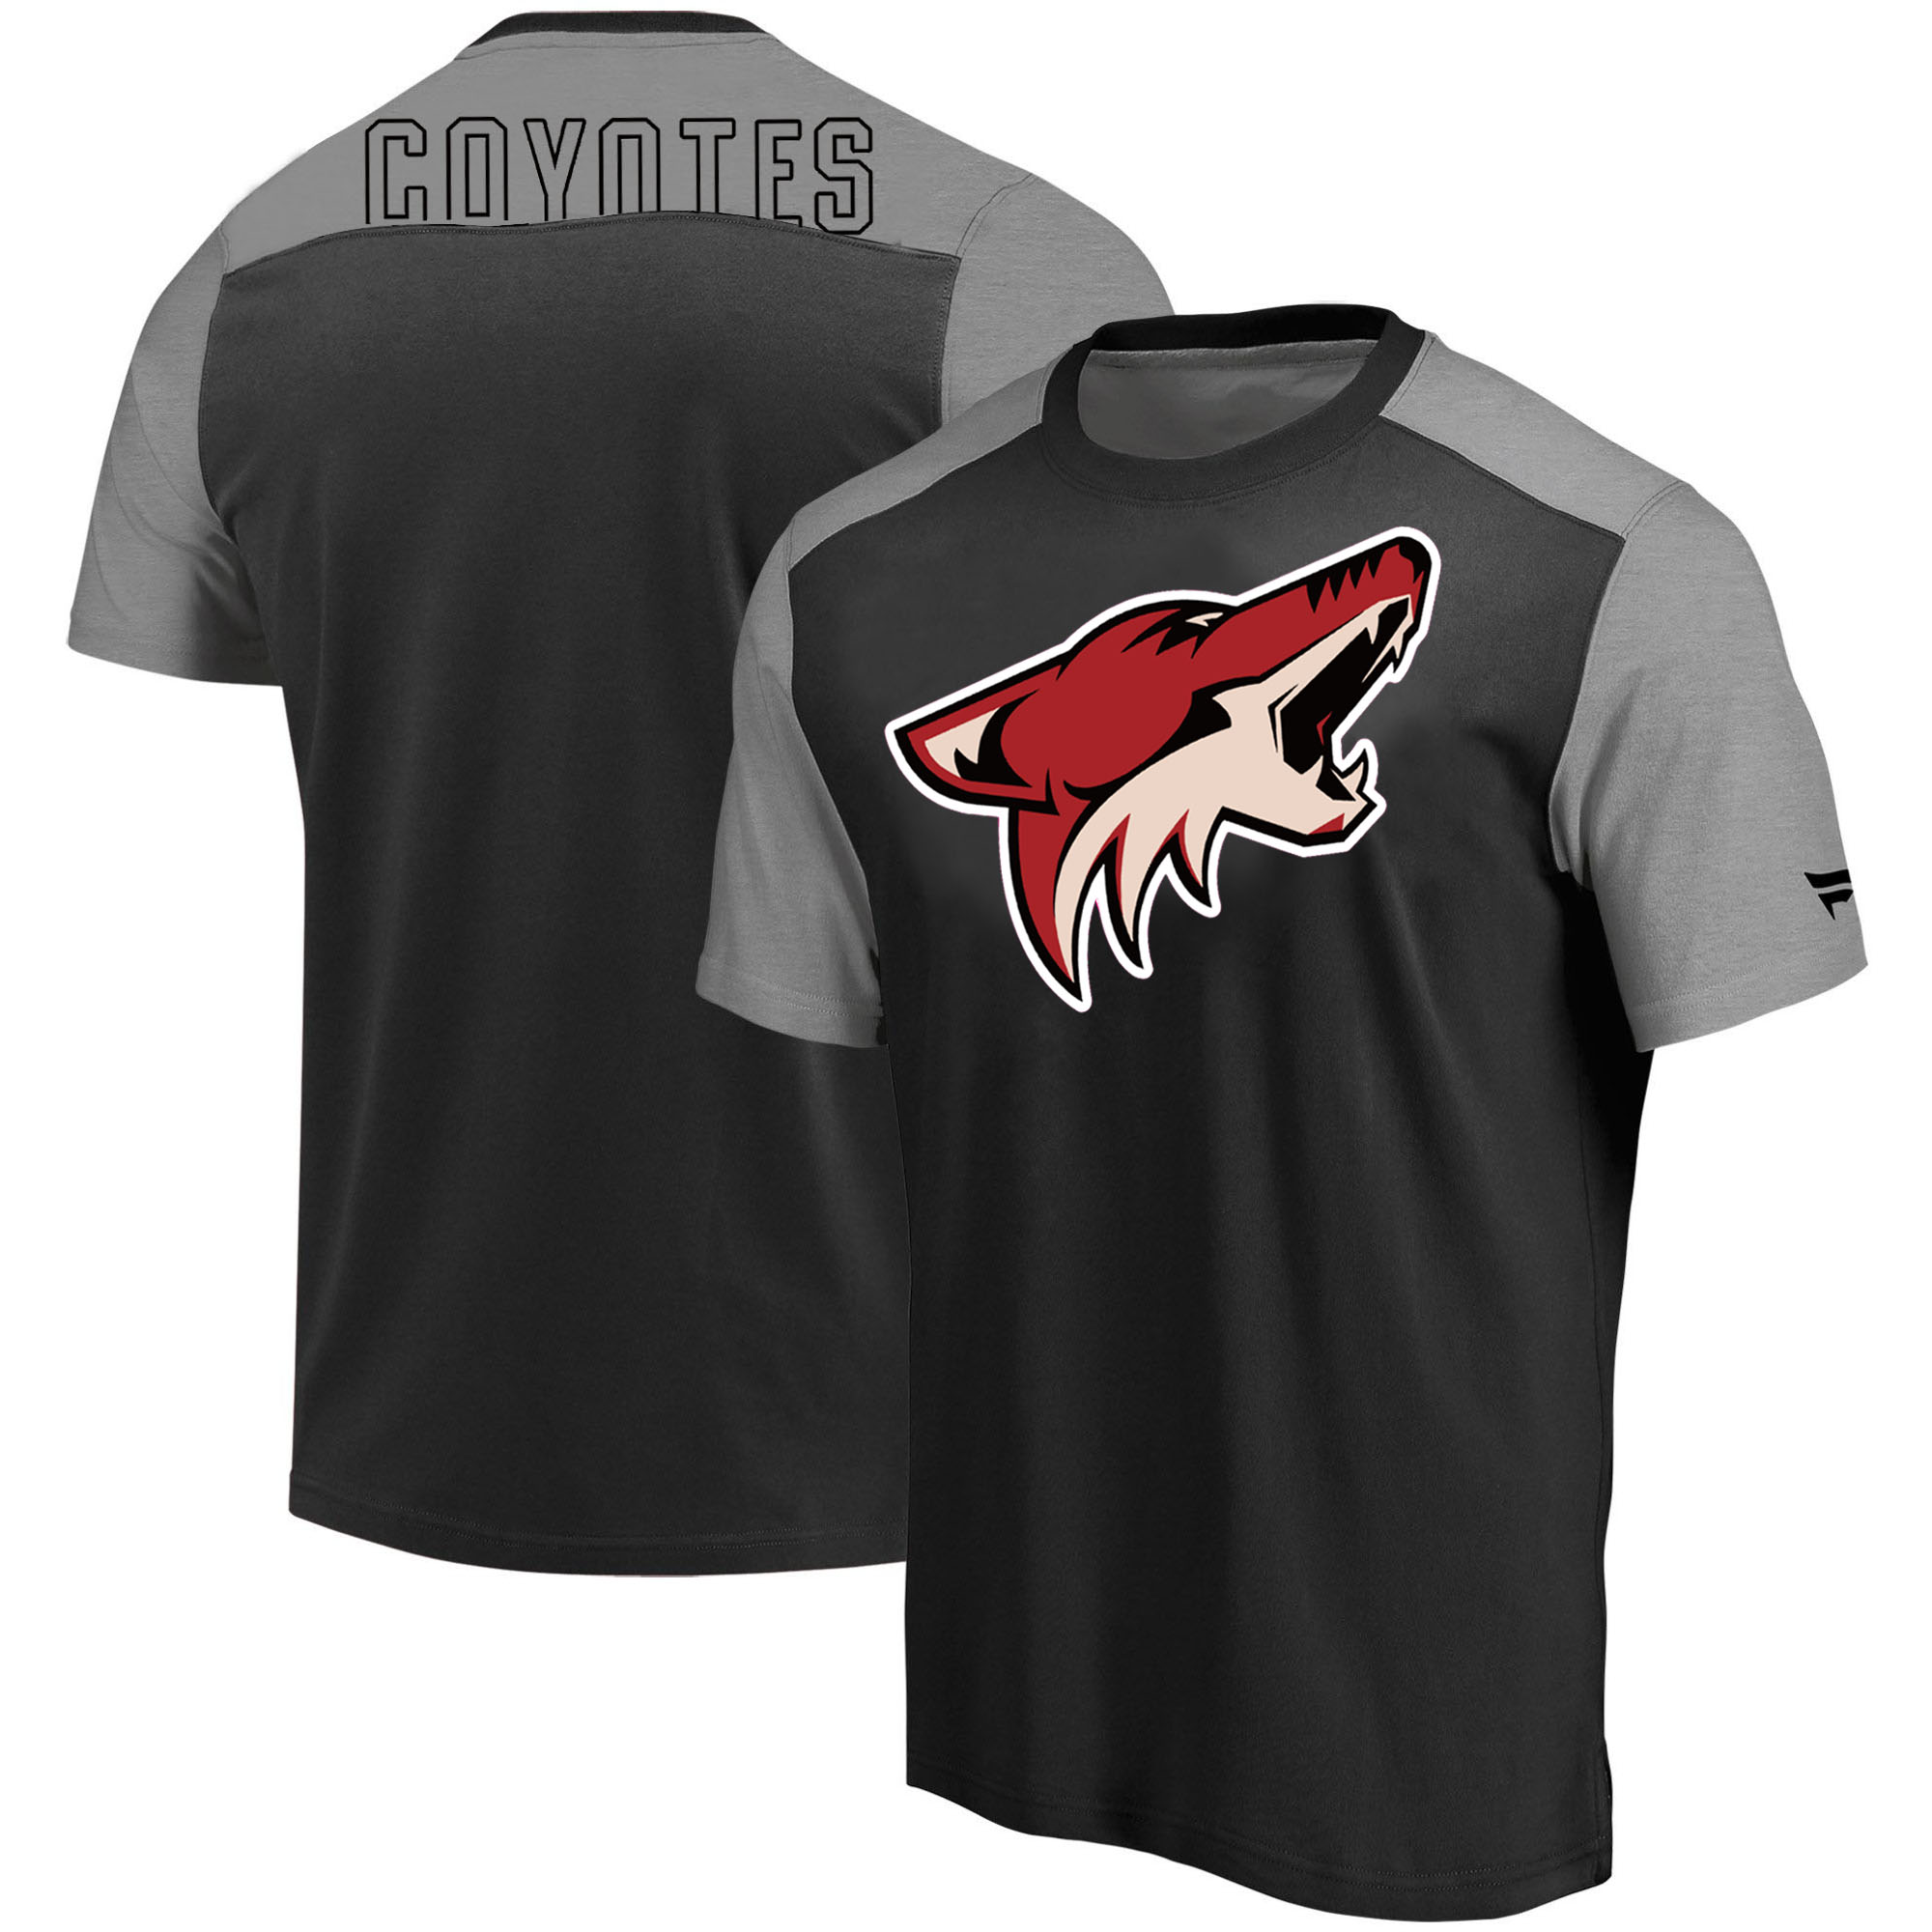 Arizona Coyotes Fanatics Branded Iconic Blocked T-Shirt Black Heathered Gray